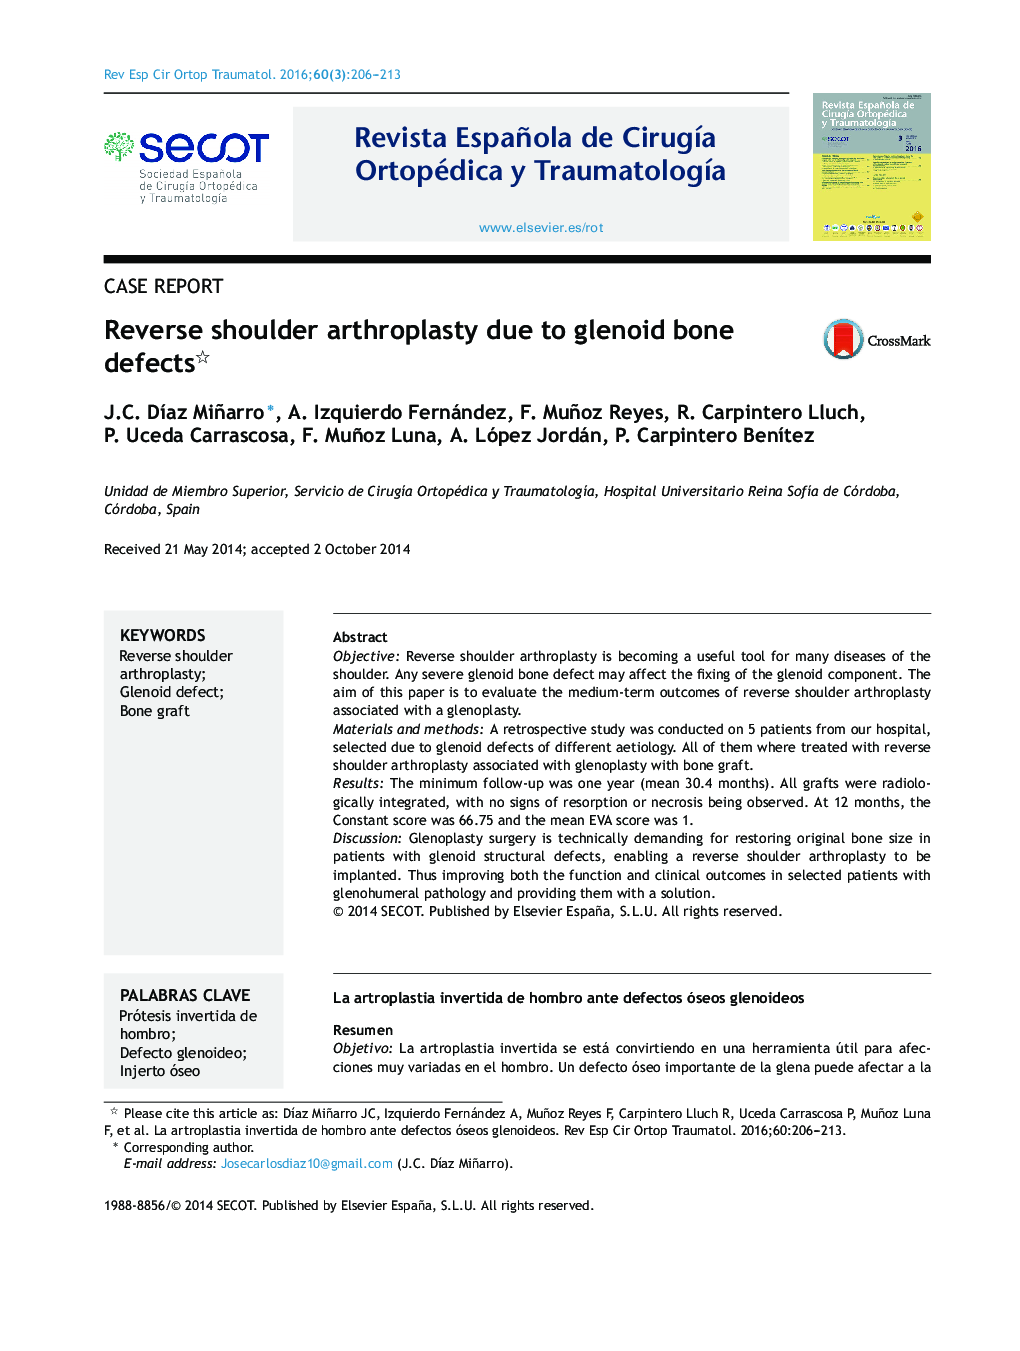 Reverse shoulder arthroplasty due to glenoid bone defects